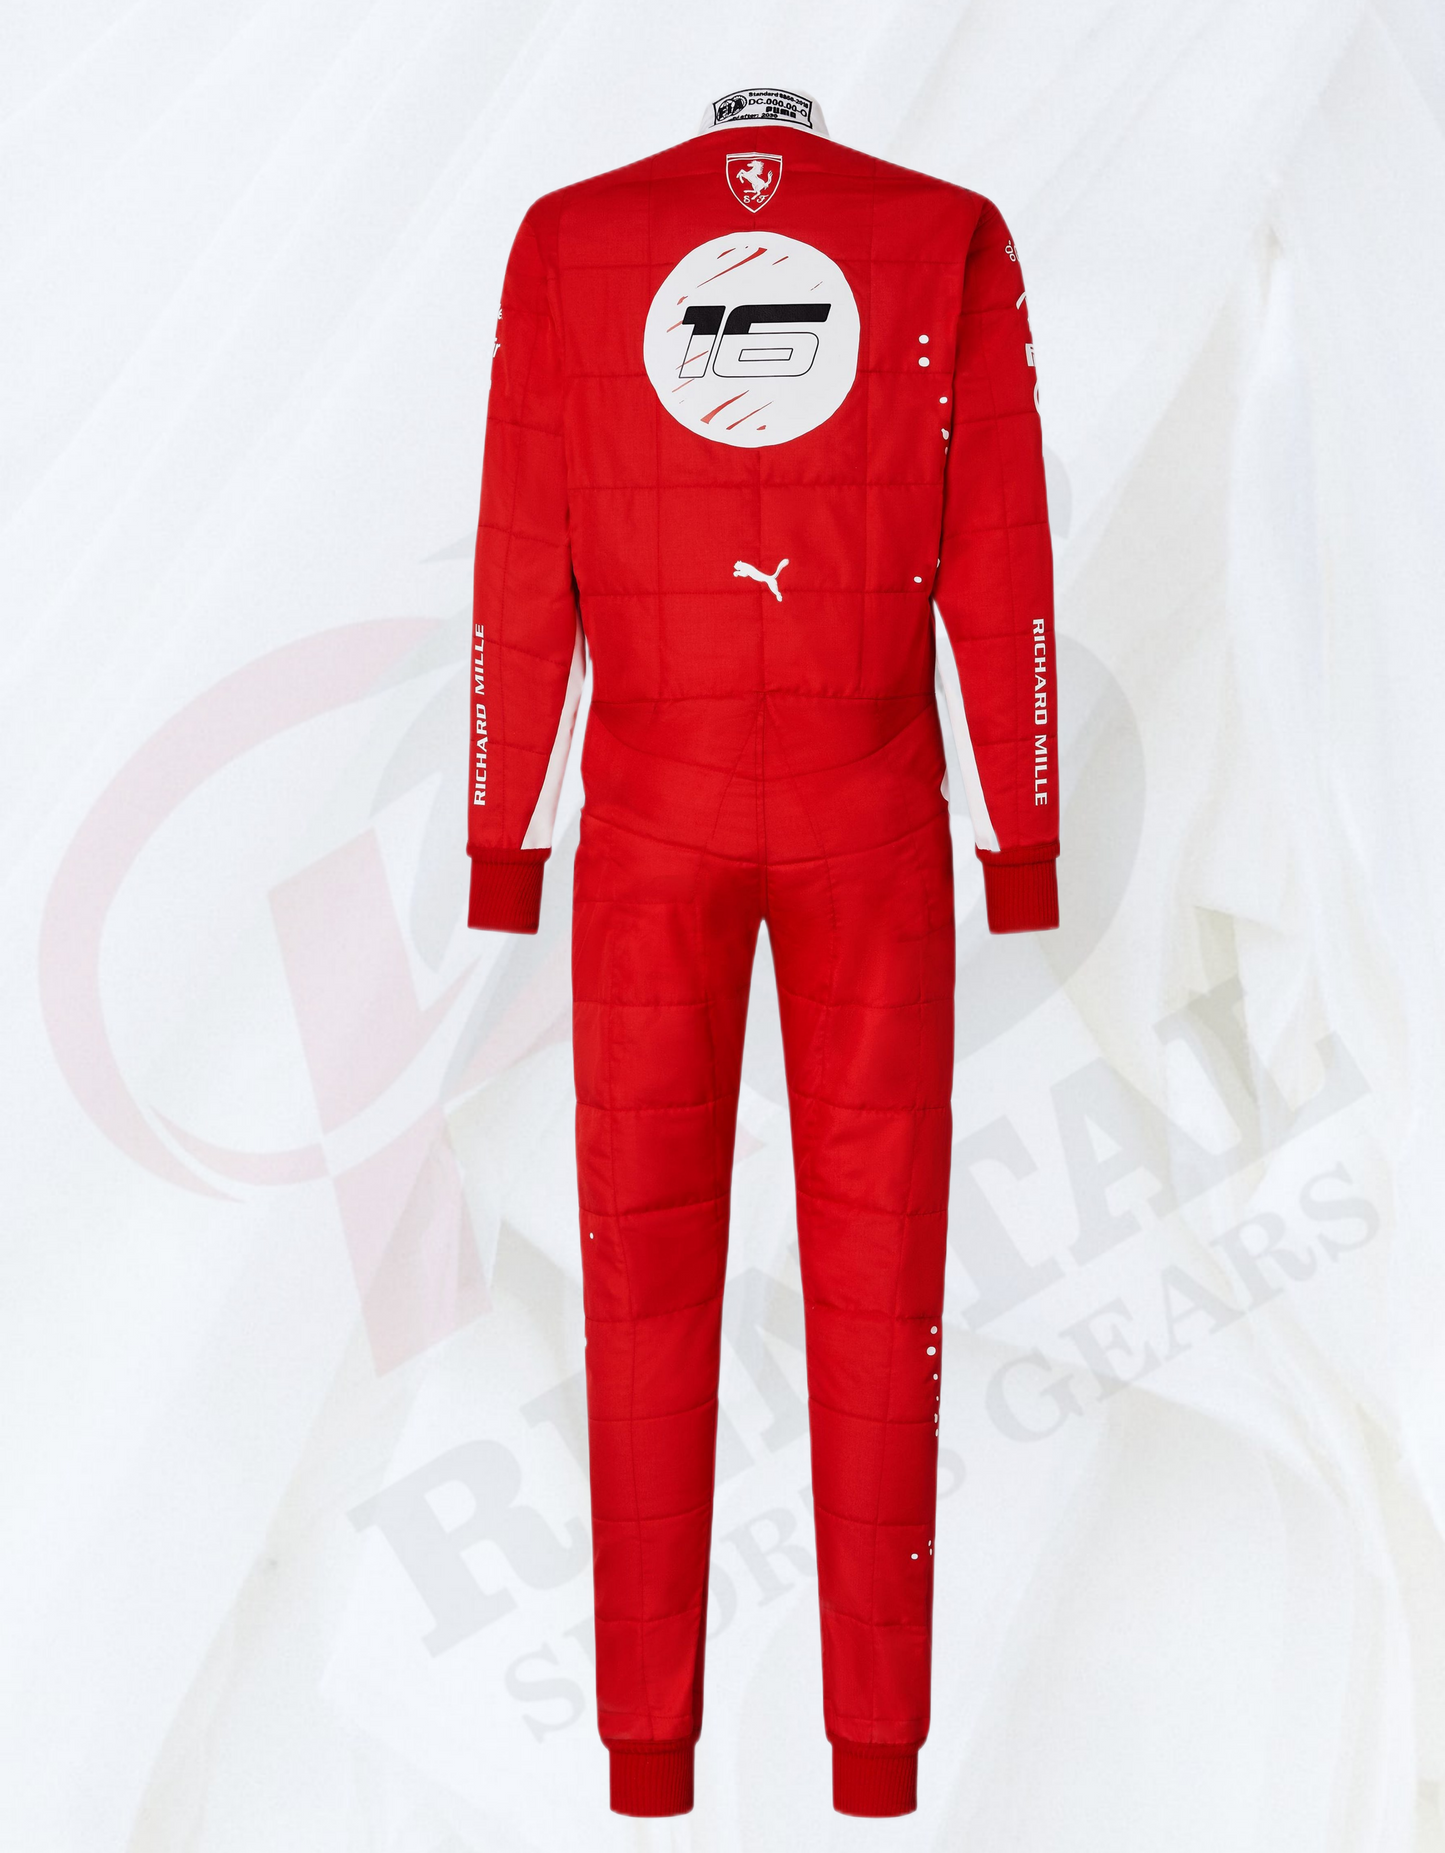 Charles Leclrec 2023 Ferrari Las Vegas Race suit F1